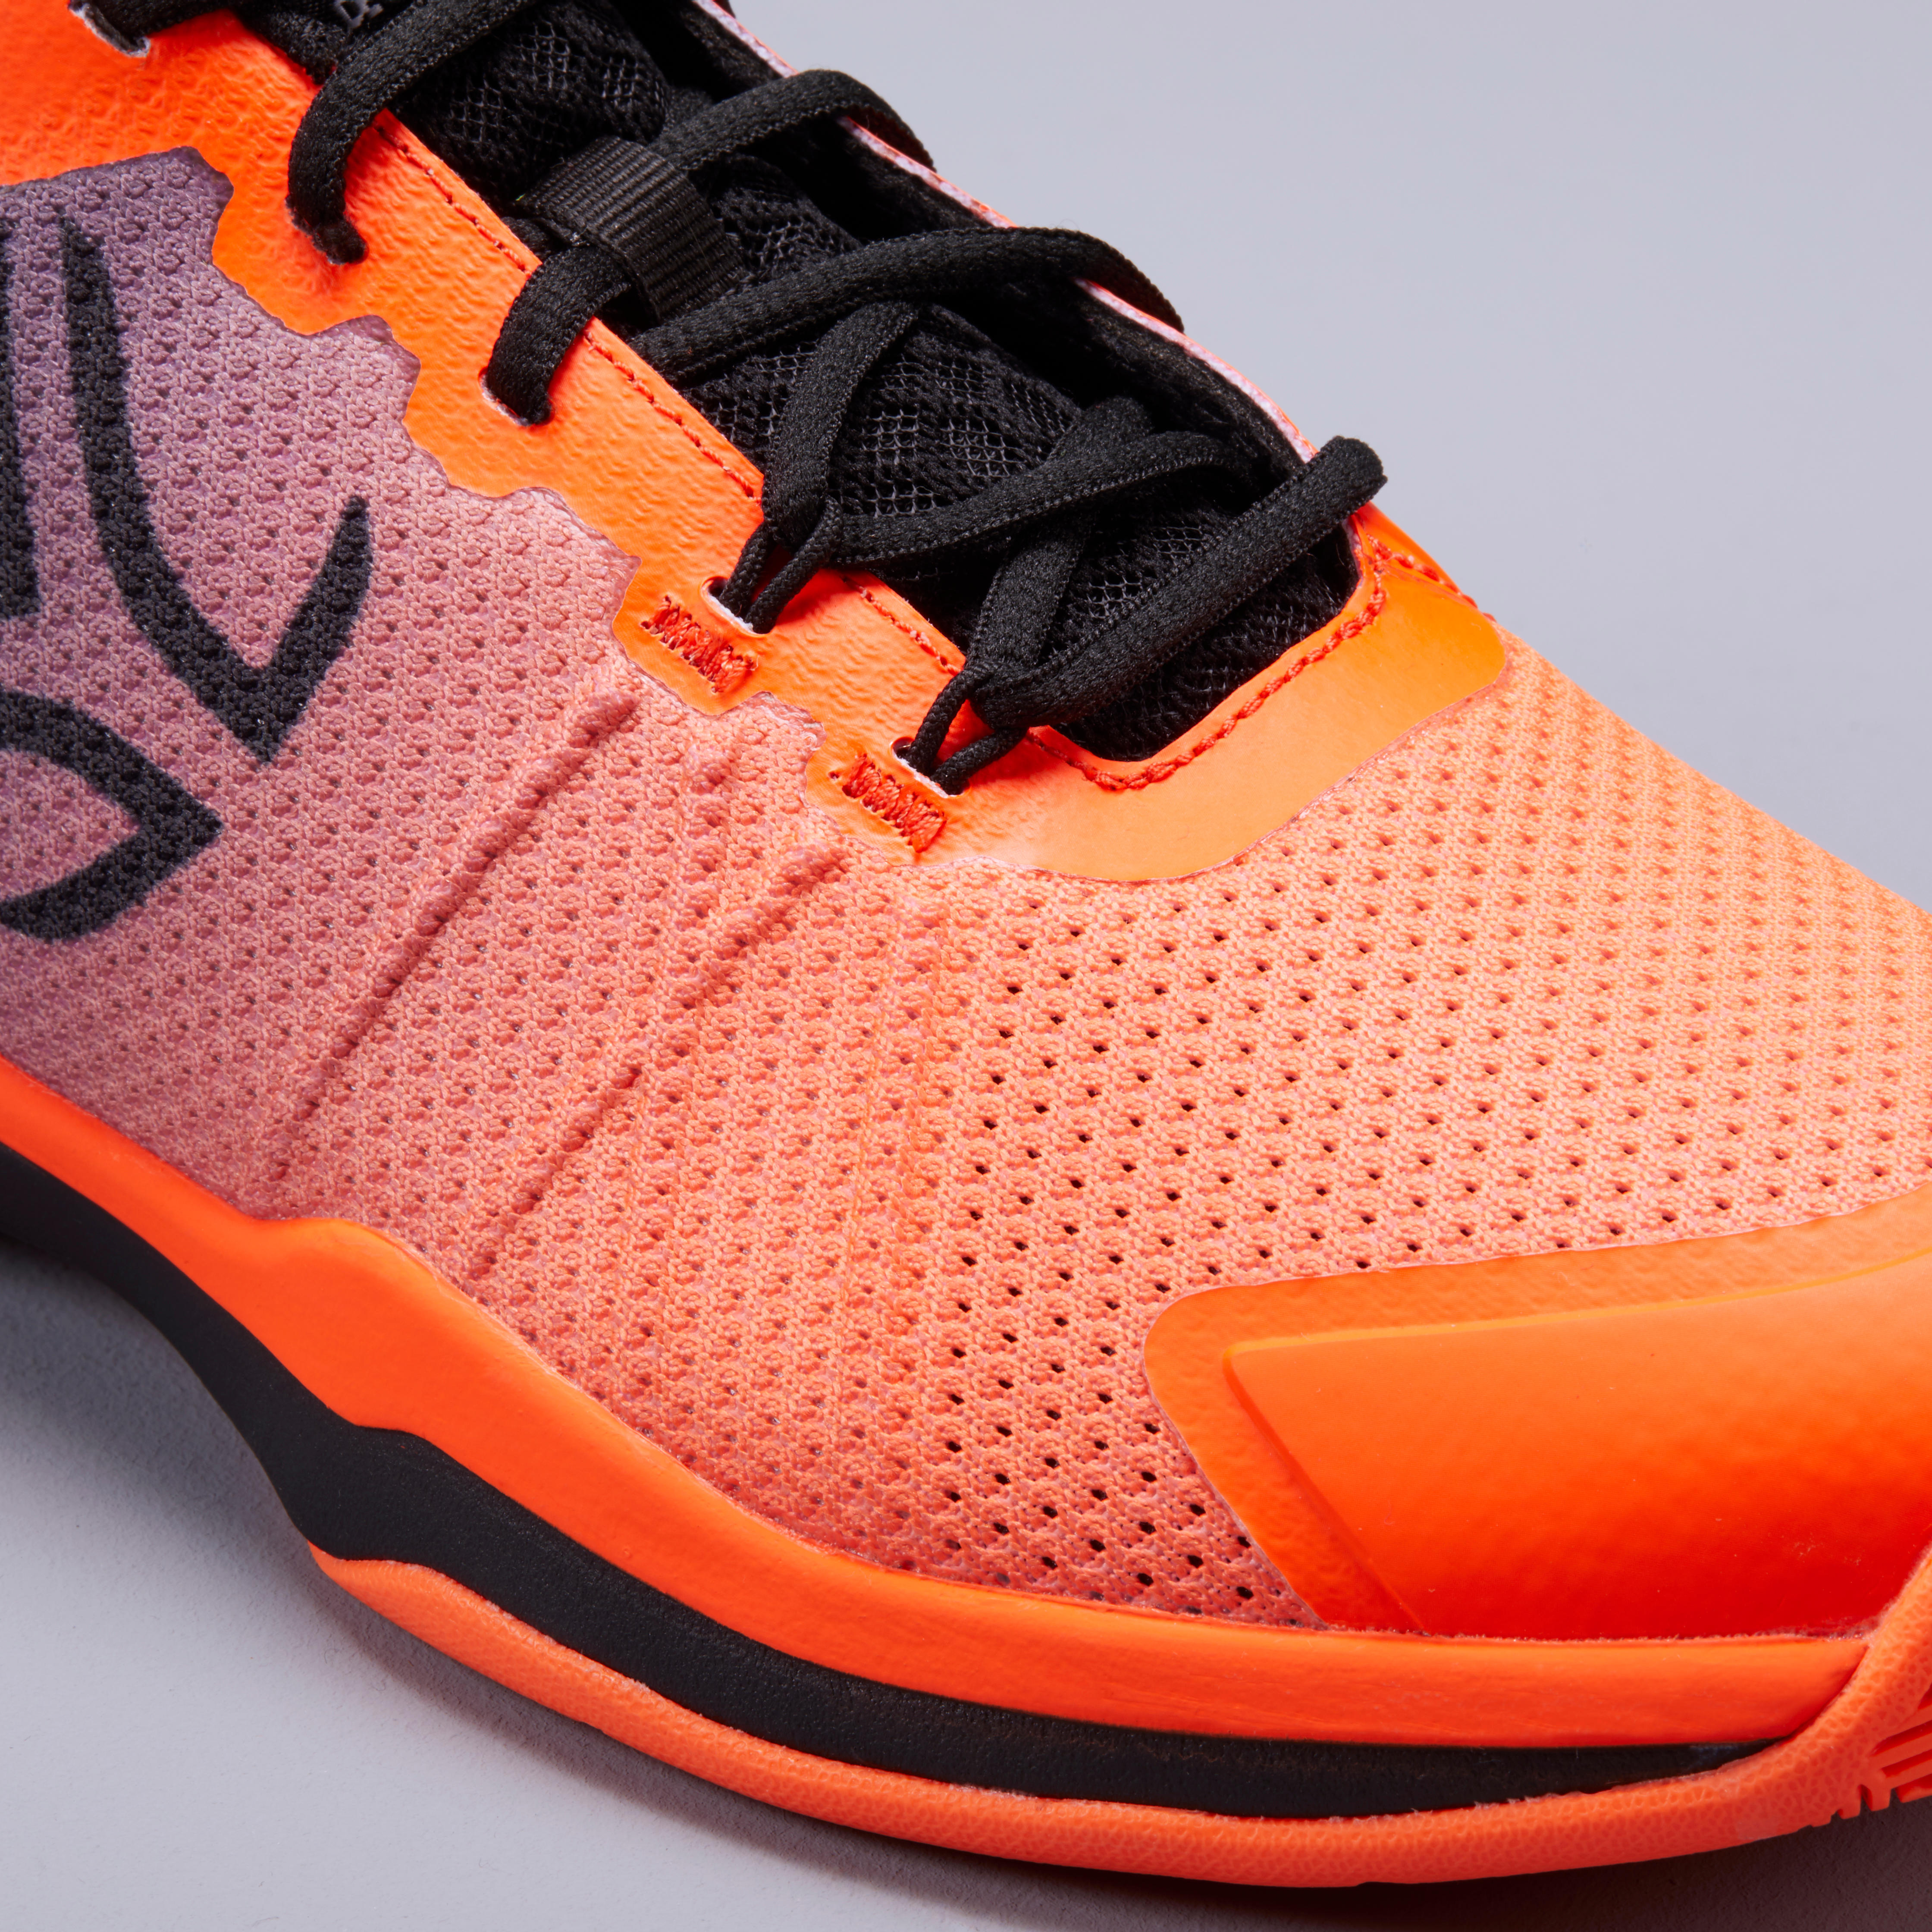 mens black and orange tennis shoes